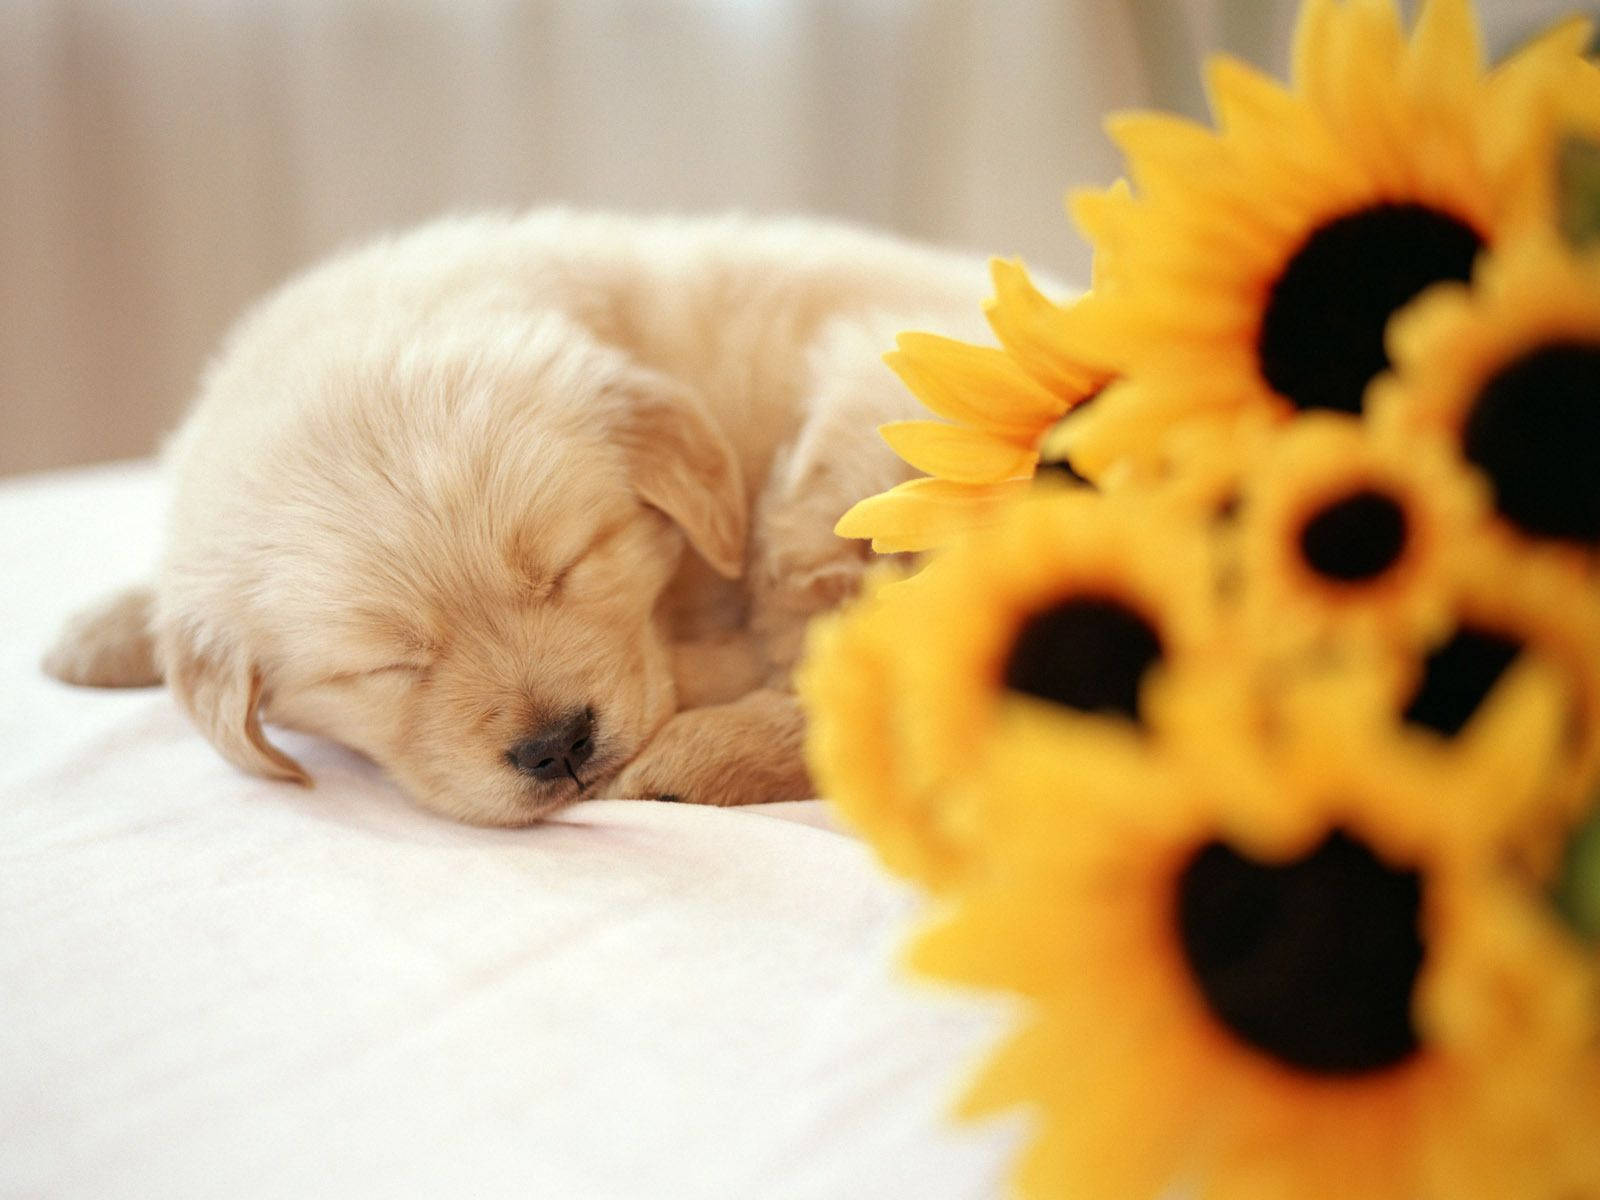 Sleeping Dog Near Sunflowers Wallpaper